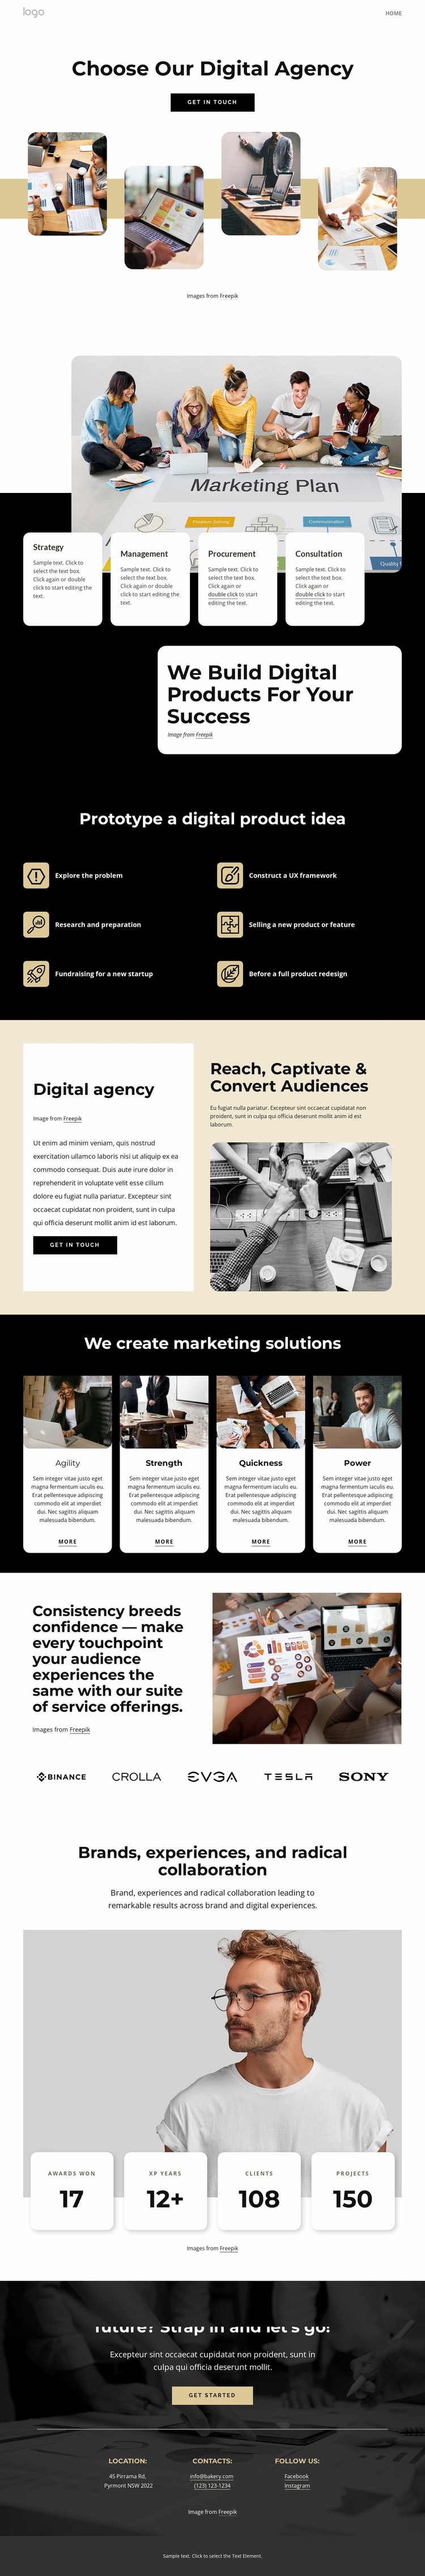 Choose our digital agency Website Template